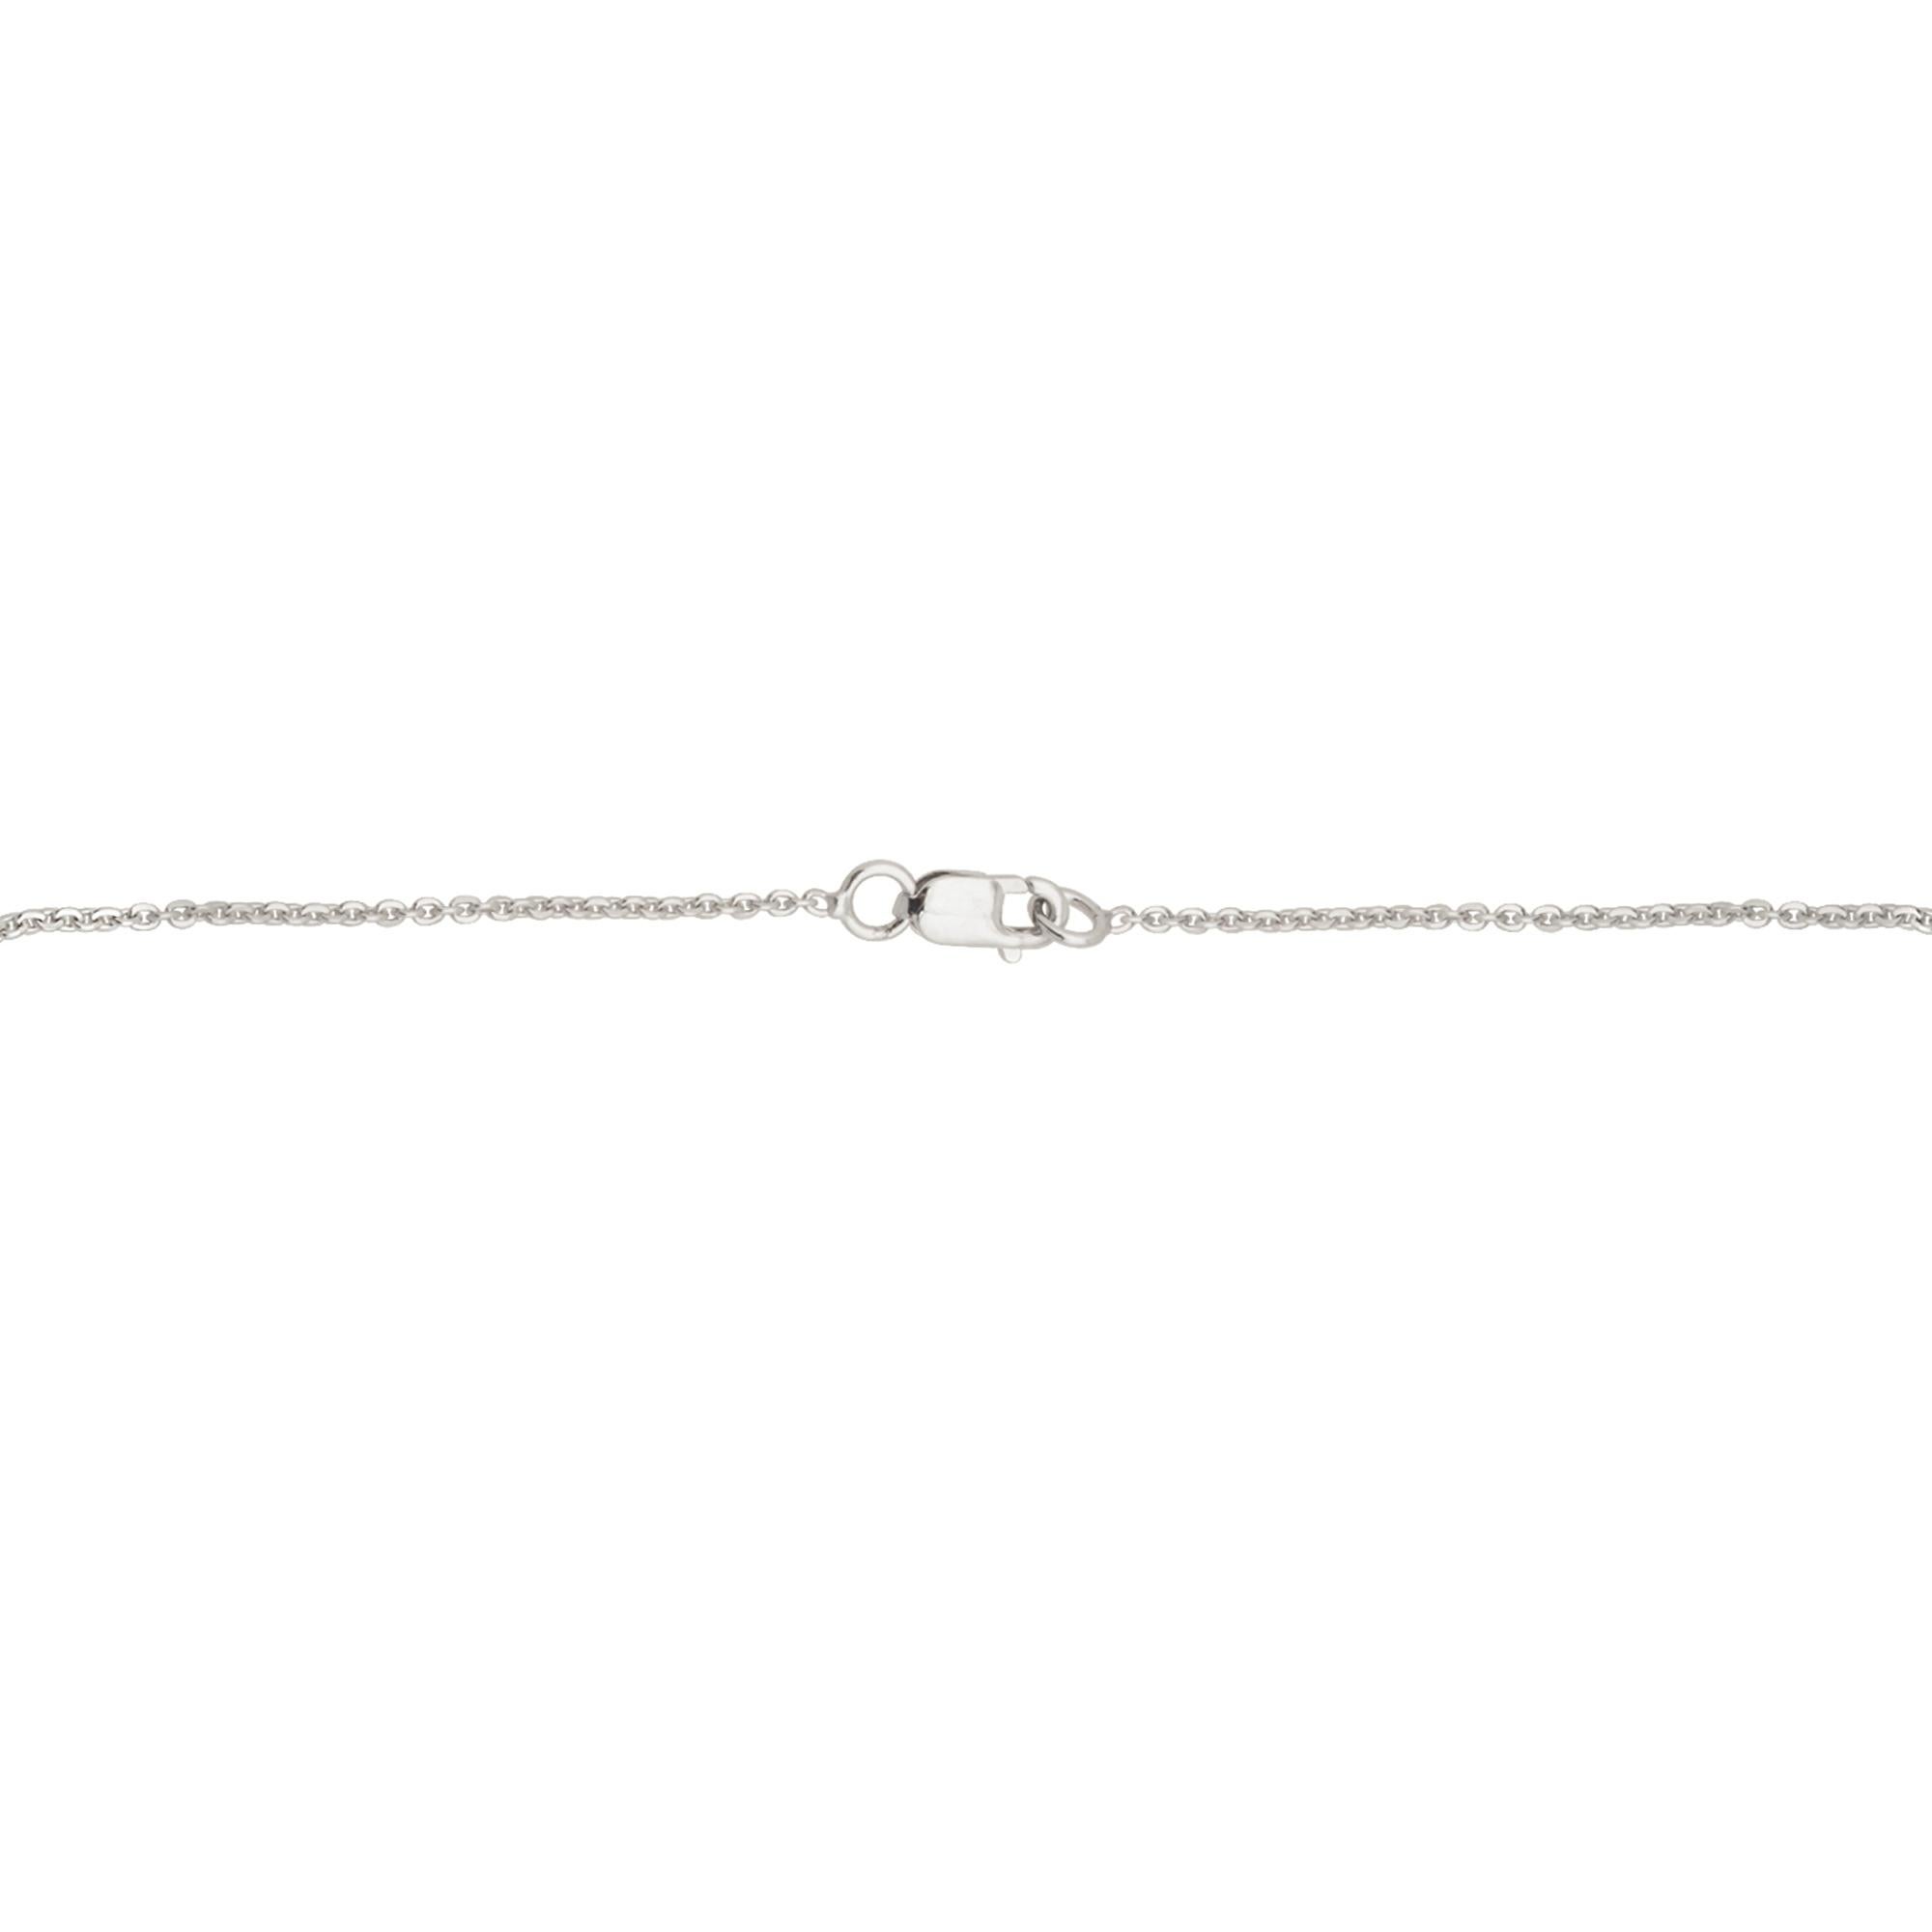 Women's 0.48 Carat Baguette Diamond Charm Pendant Necklace Solid 14k White Gold Jewelry For Sale